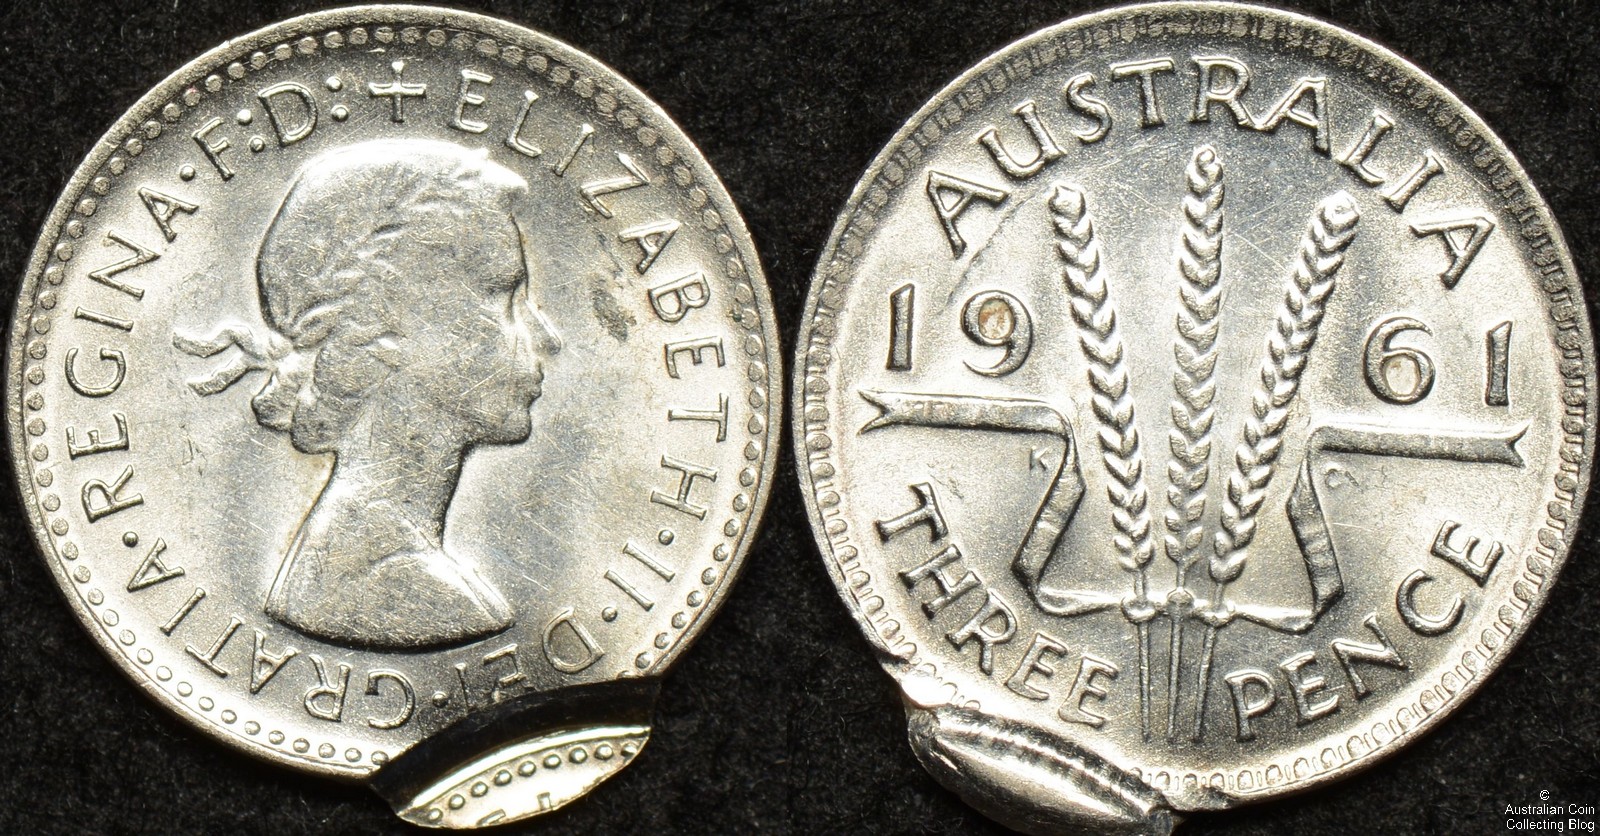 Australia 1961 Threepence Double Struck Coin Error